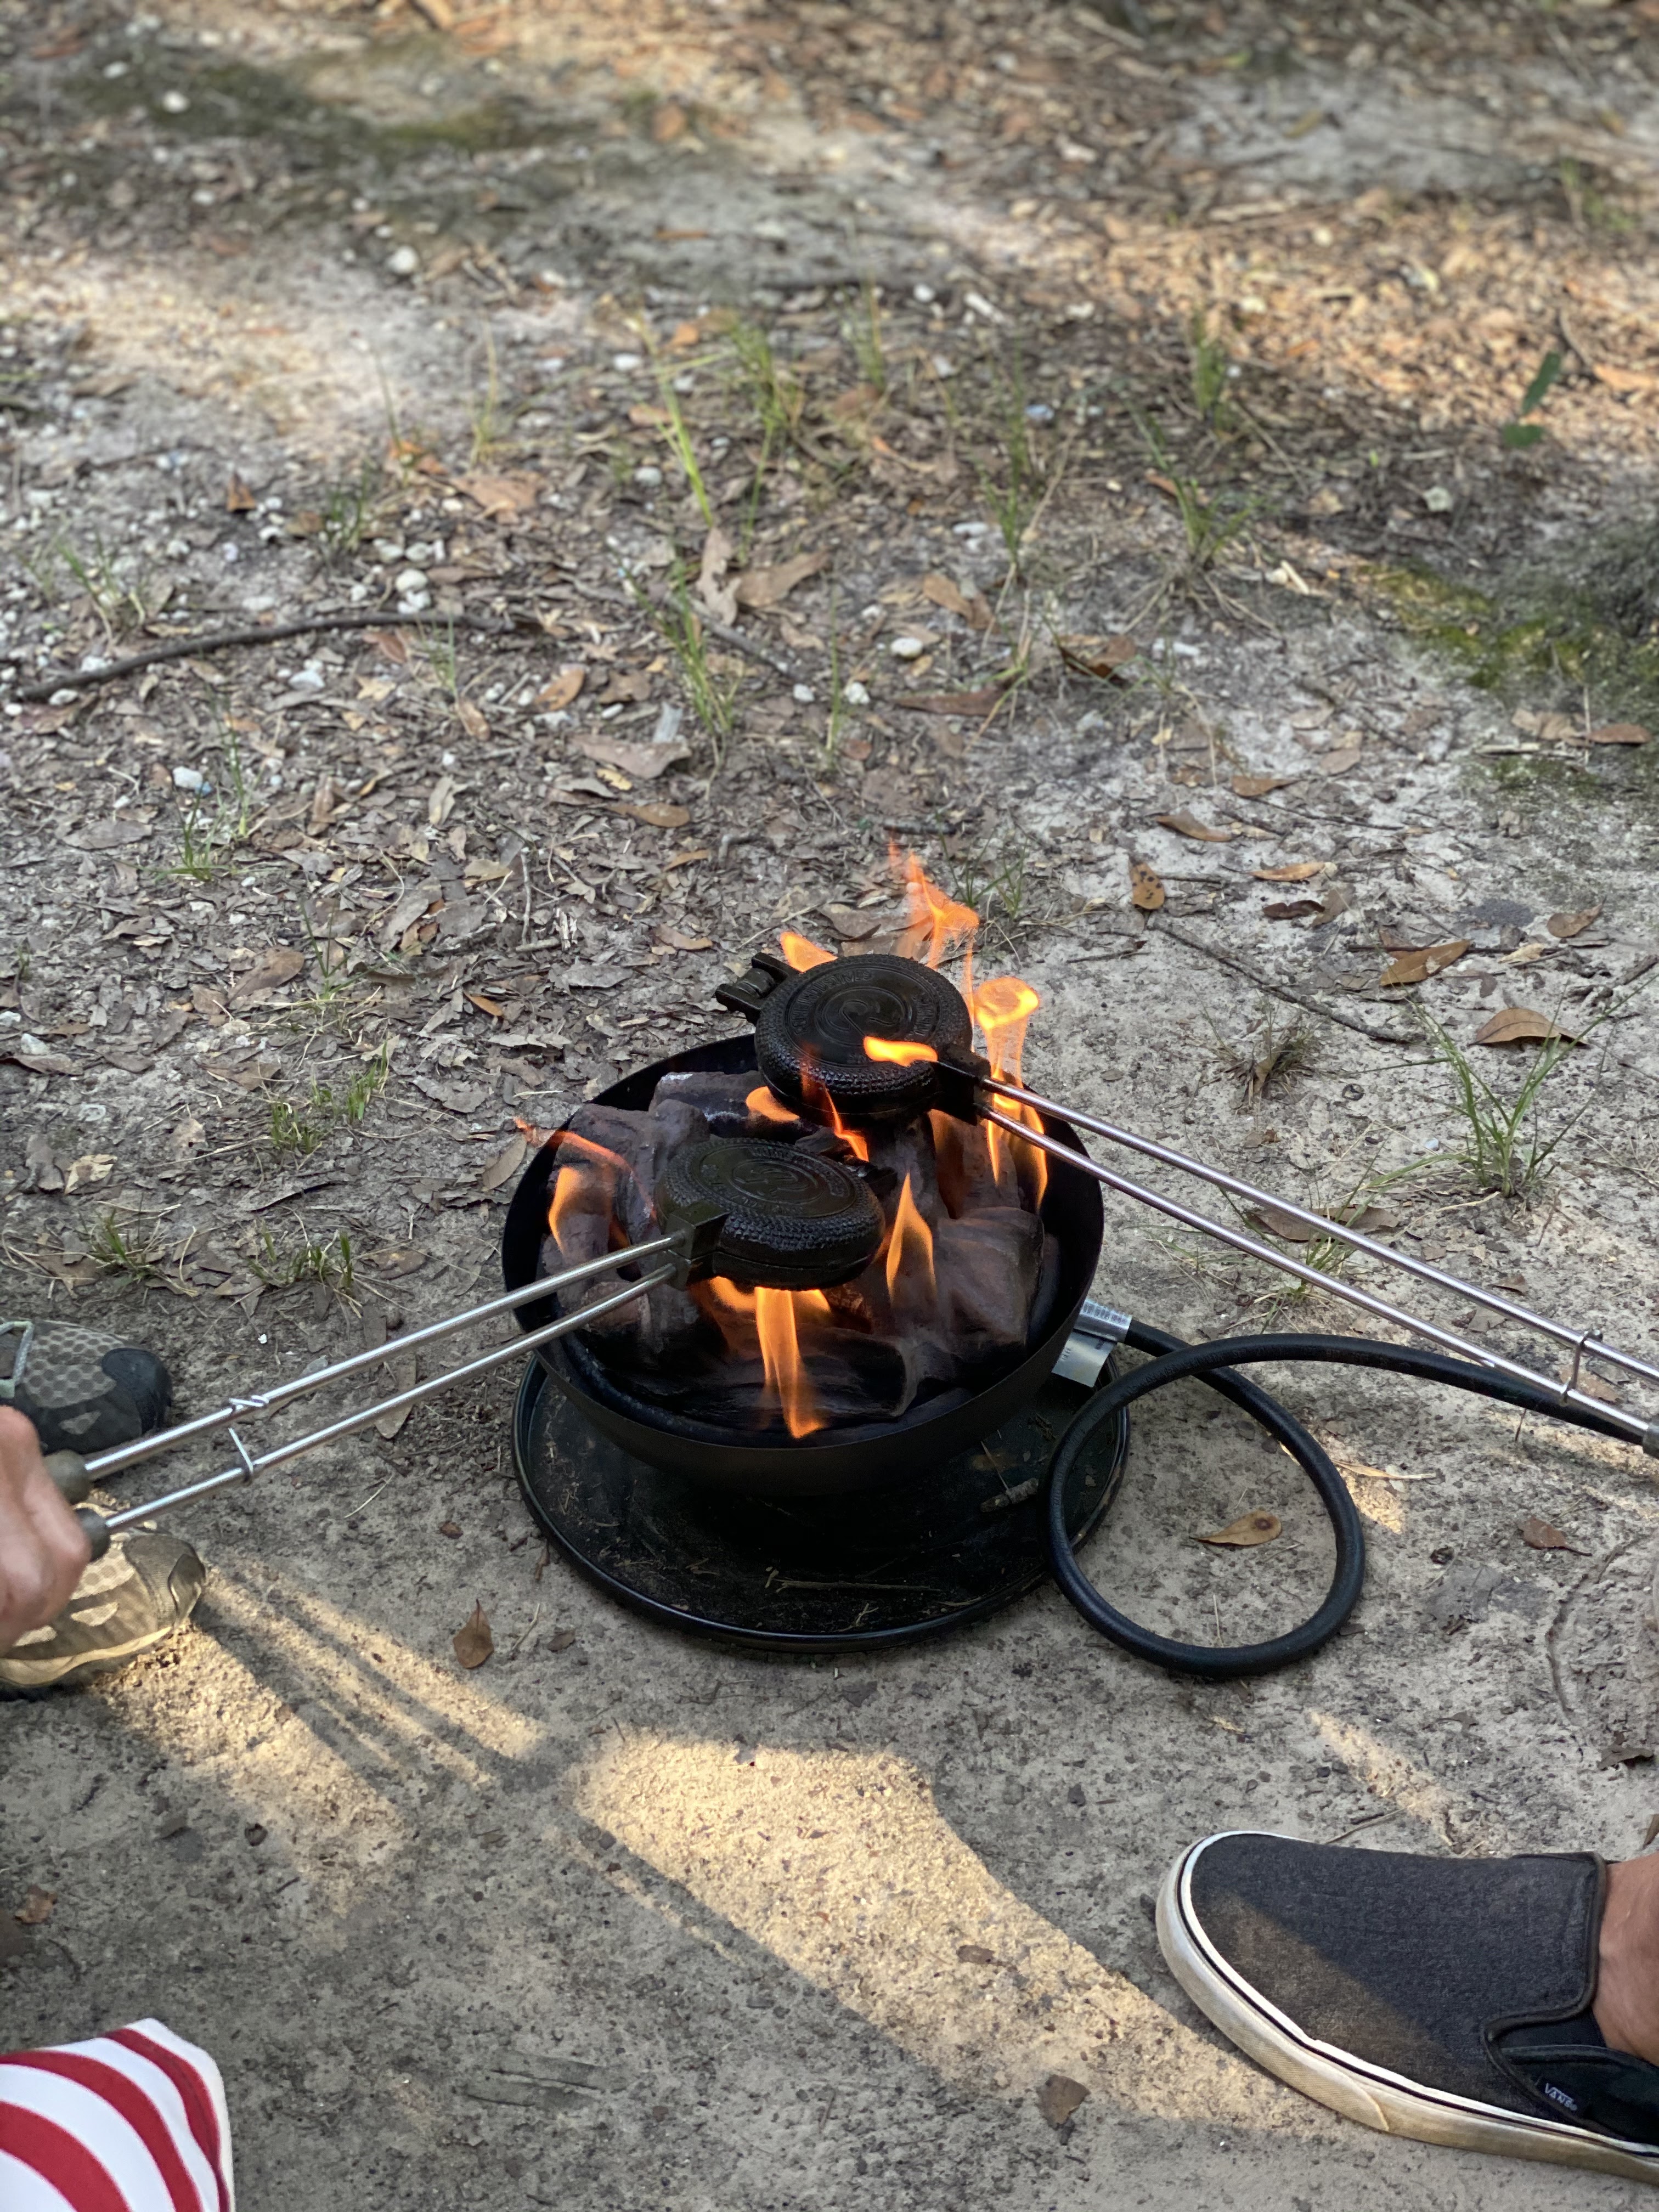 Campfire pie irons hit different. : r/castiron